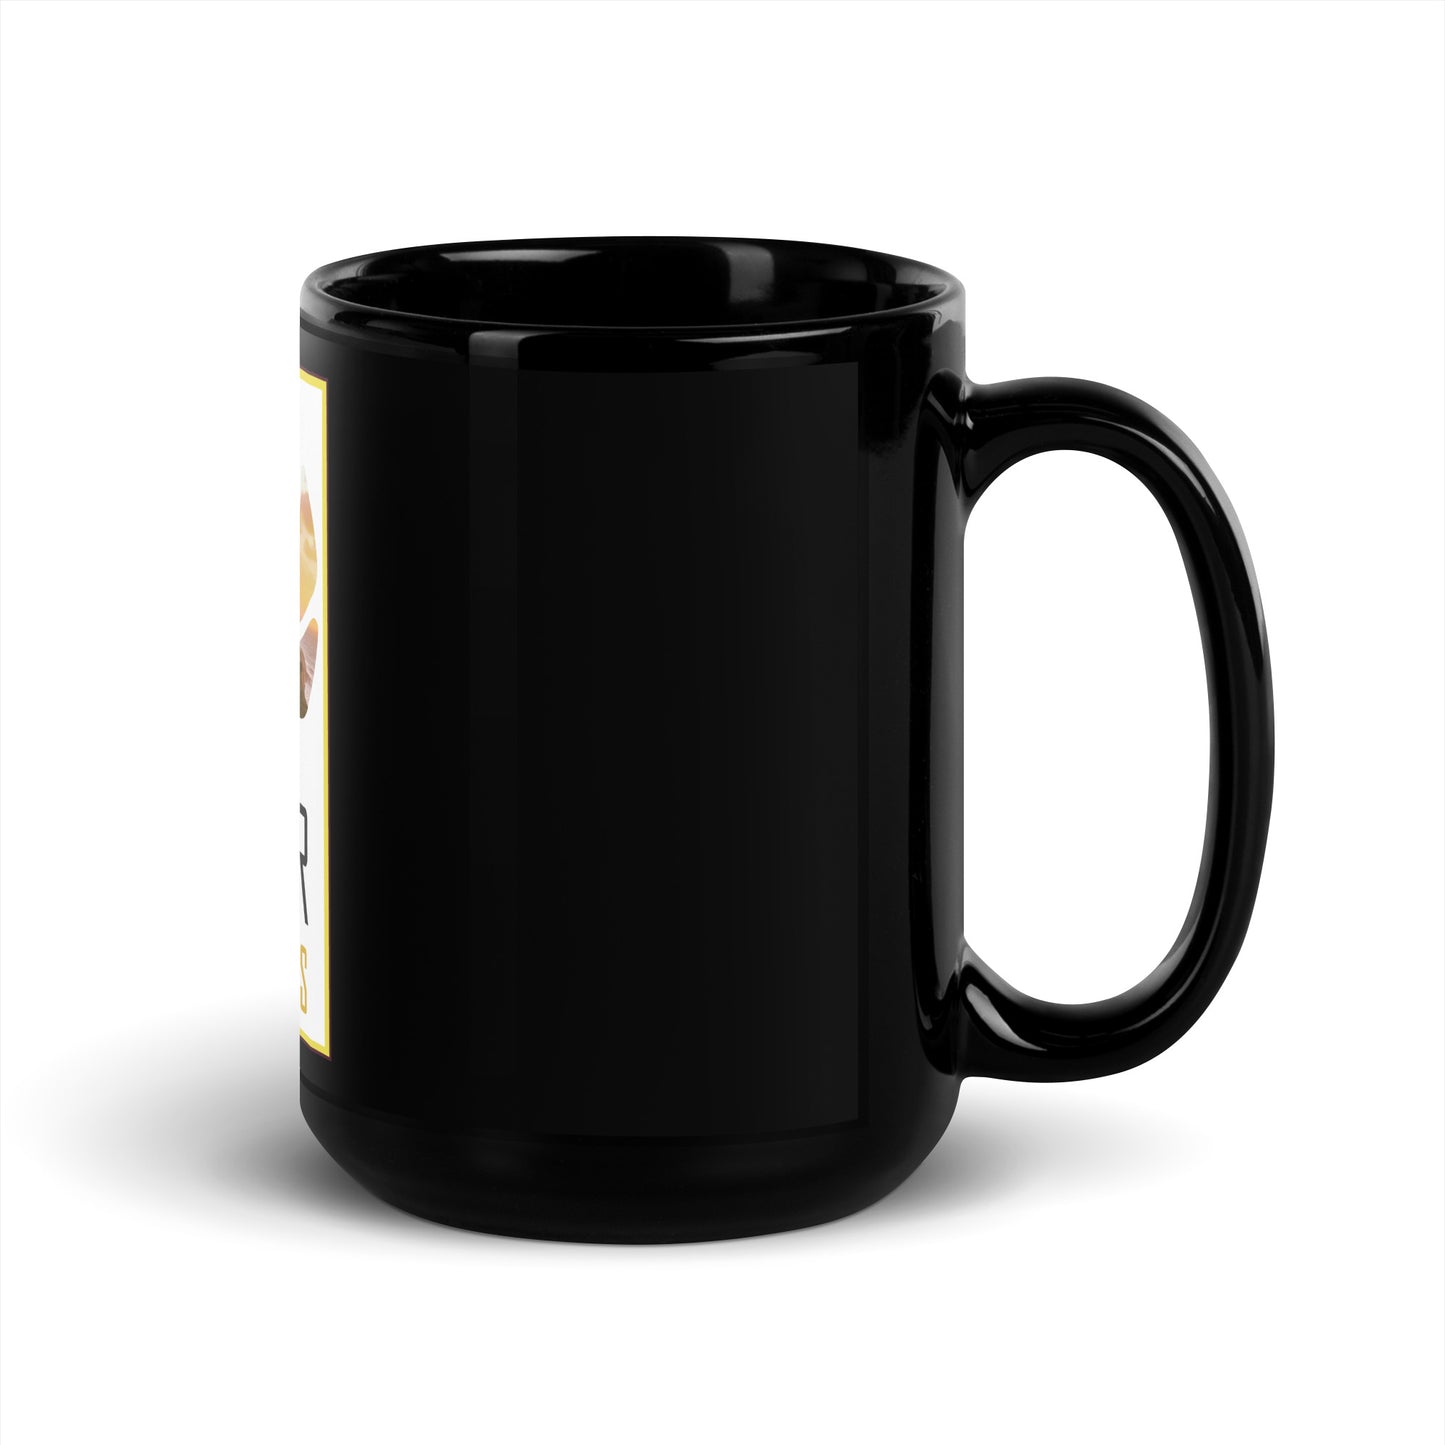 Big Sur Adventures Black Glossy Mug